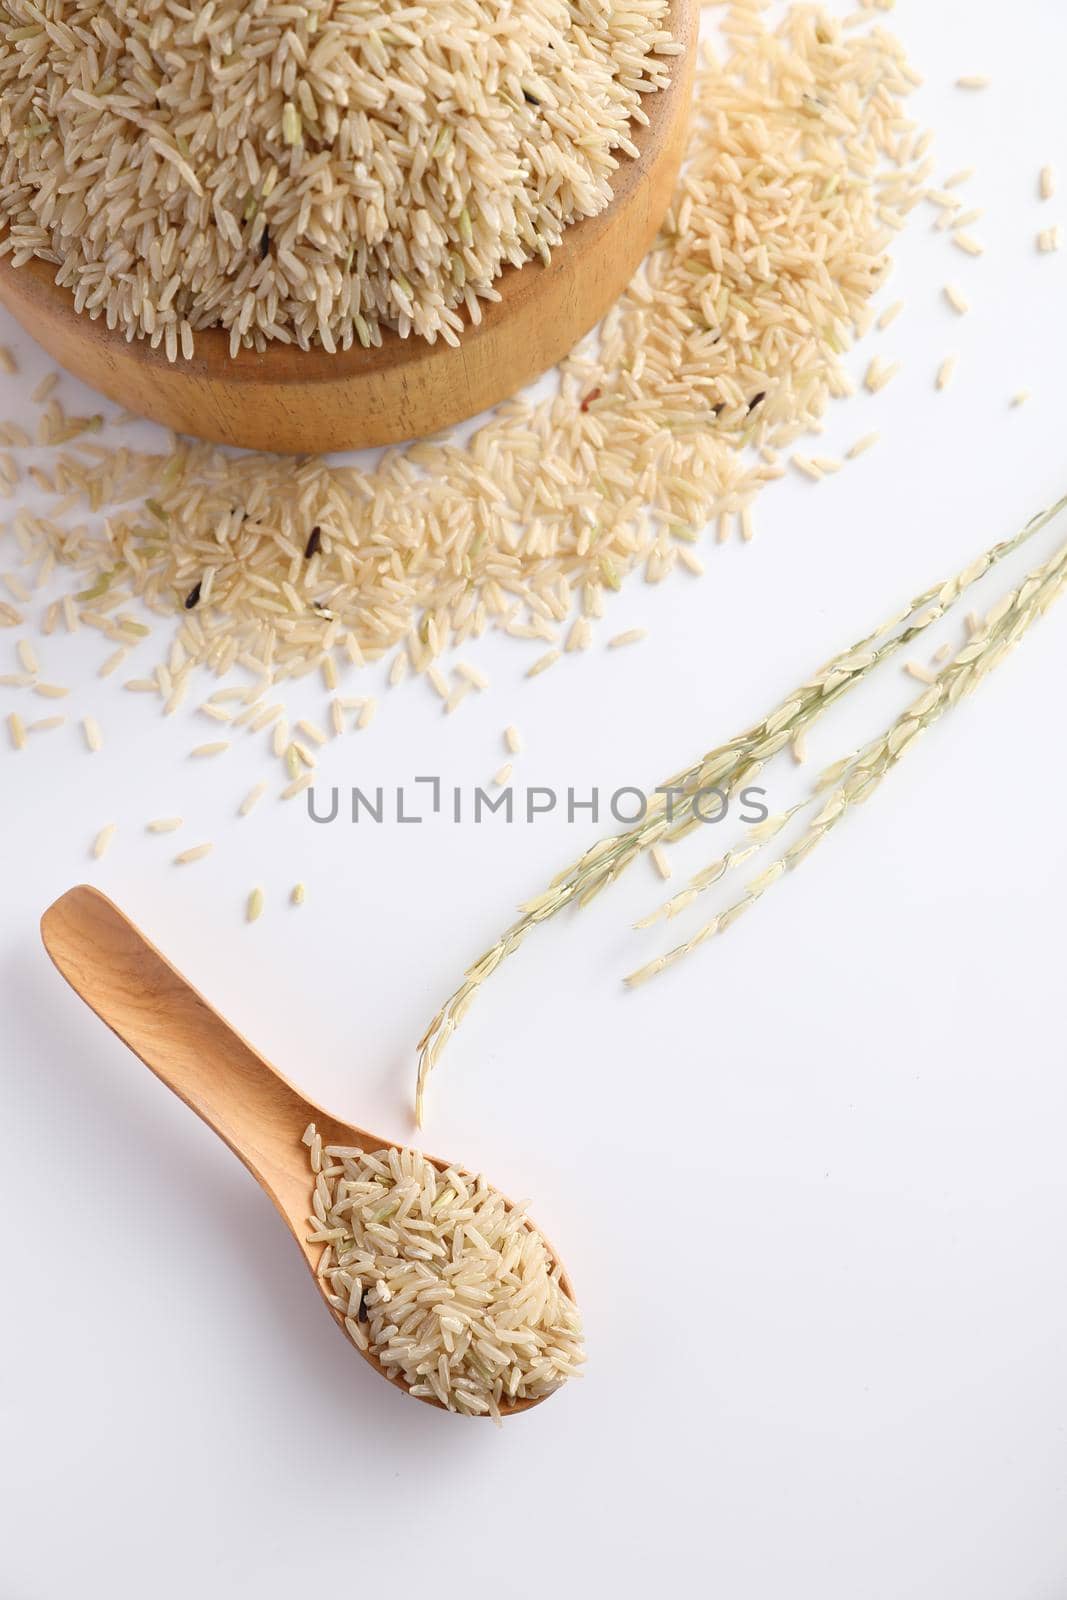 Organic raw brown rice in close up by piyato